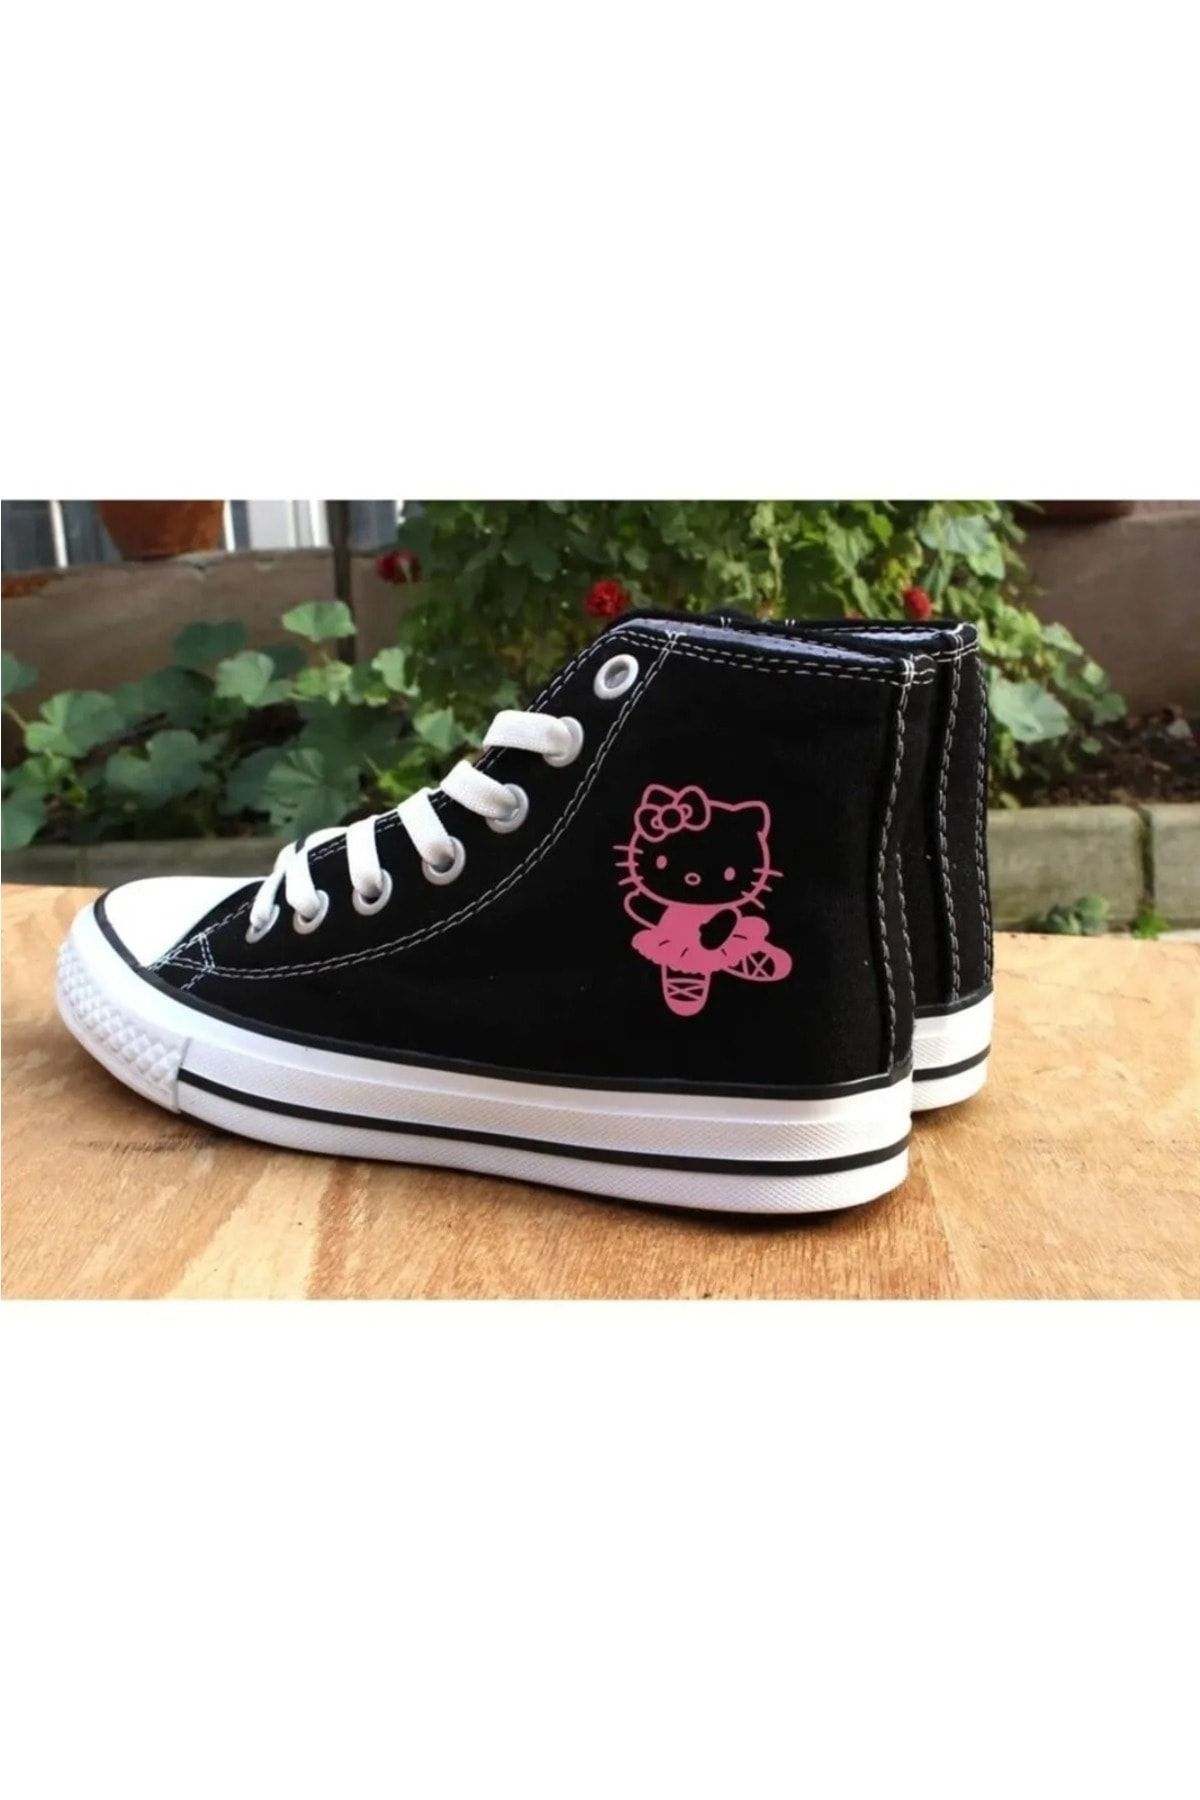 BROOD's Siyah Pink Hello Kitty Baskılı Kanvas Chuck Taylor Boğazlı Bağcıklı Ayakkabı